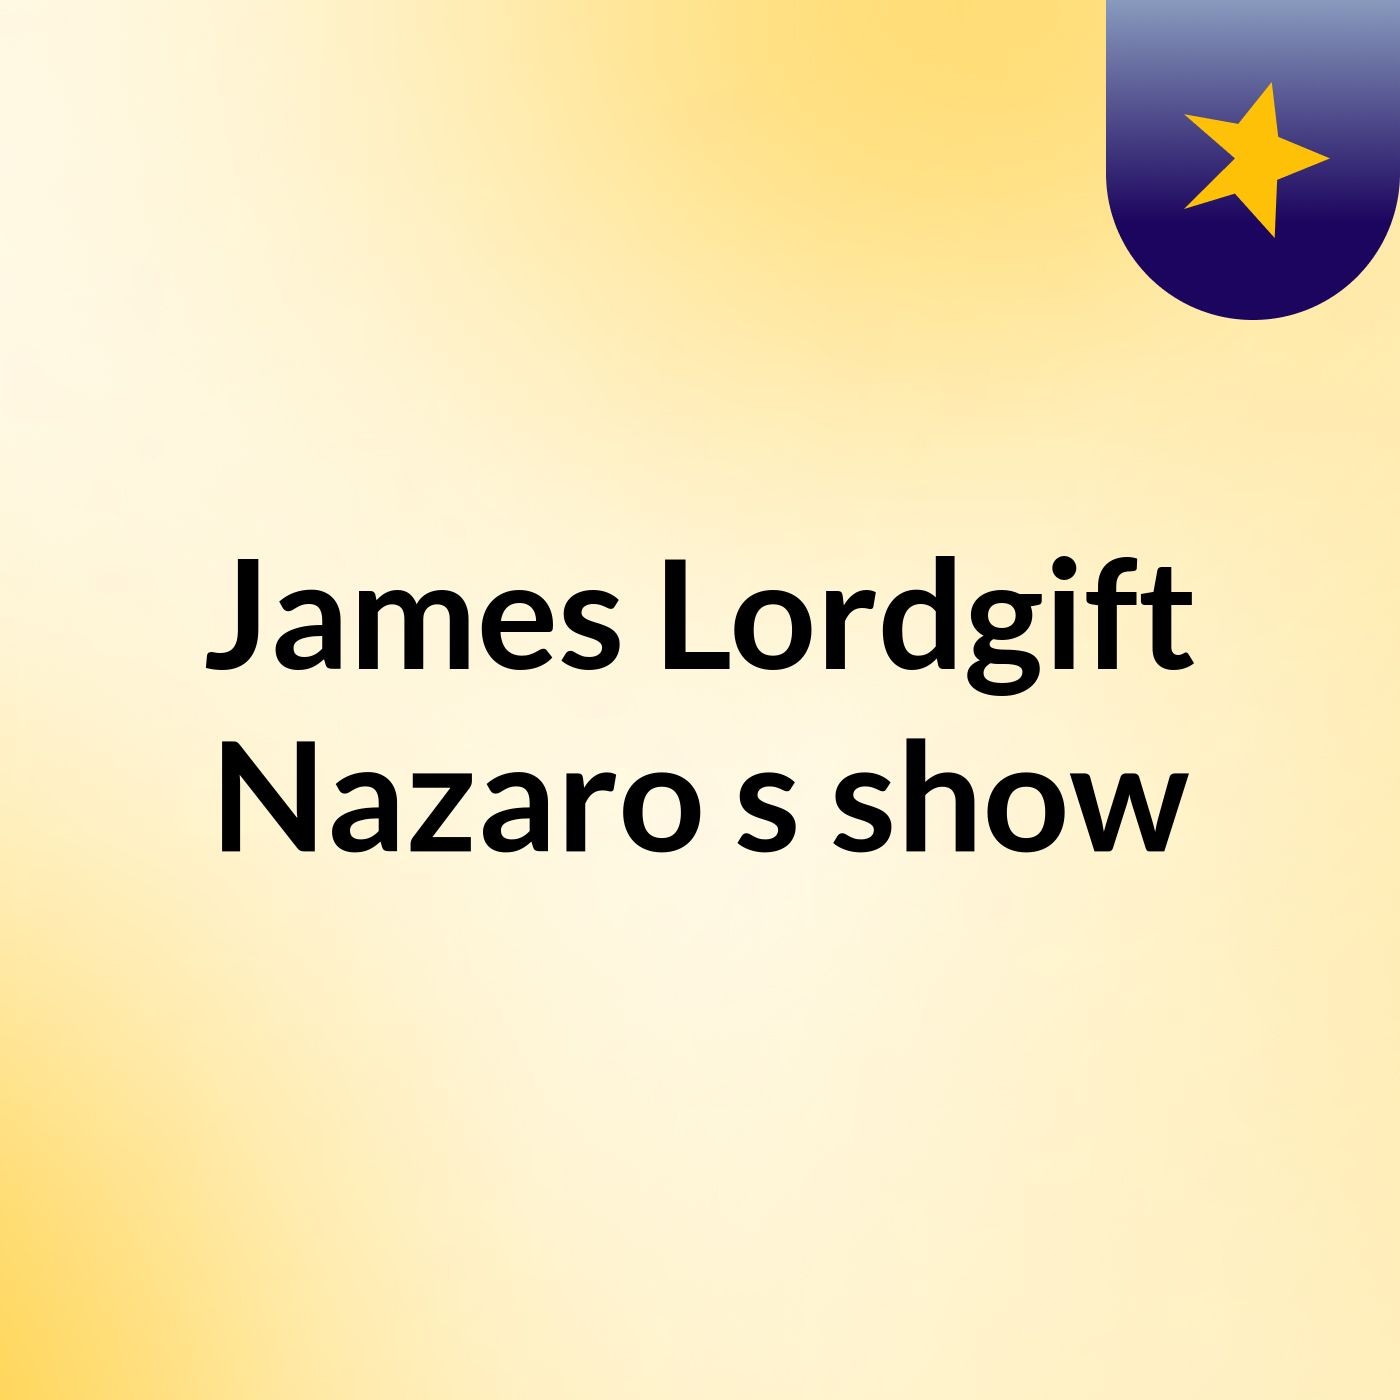 James Lordgift Nazaro's show